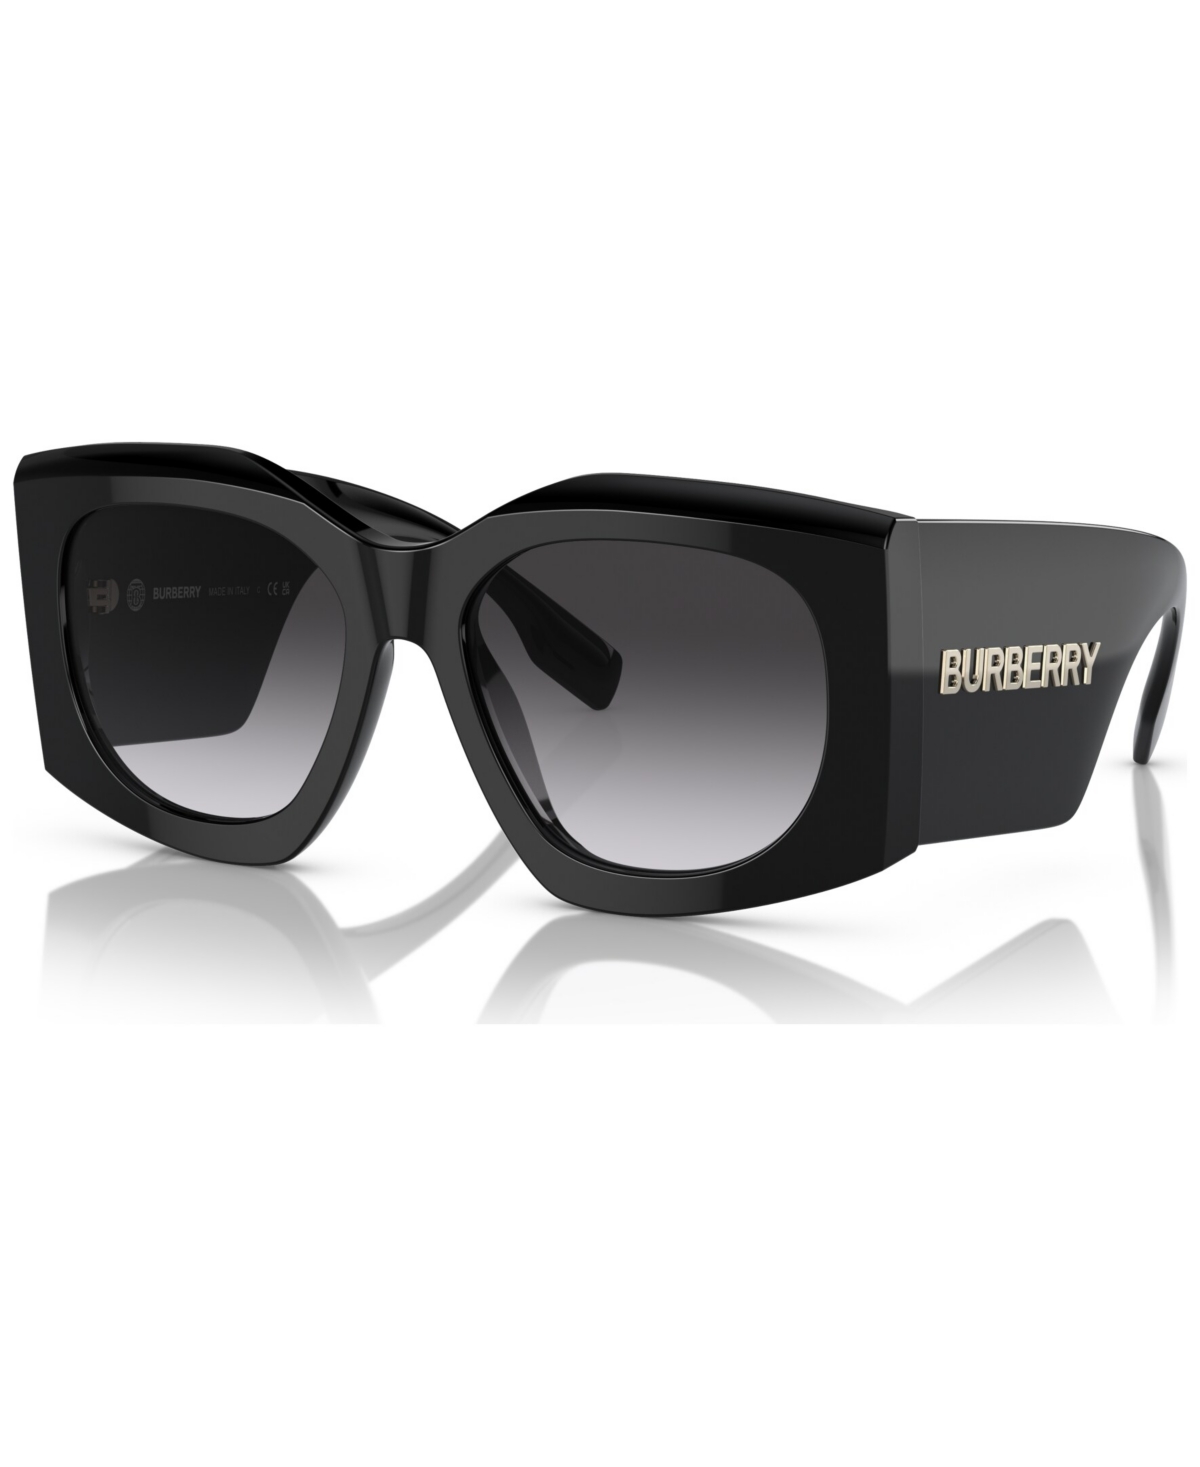 Burberry Women's Sunglasses, Madeline In Black